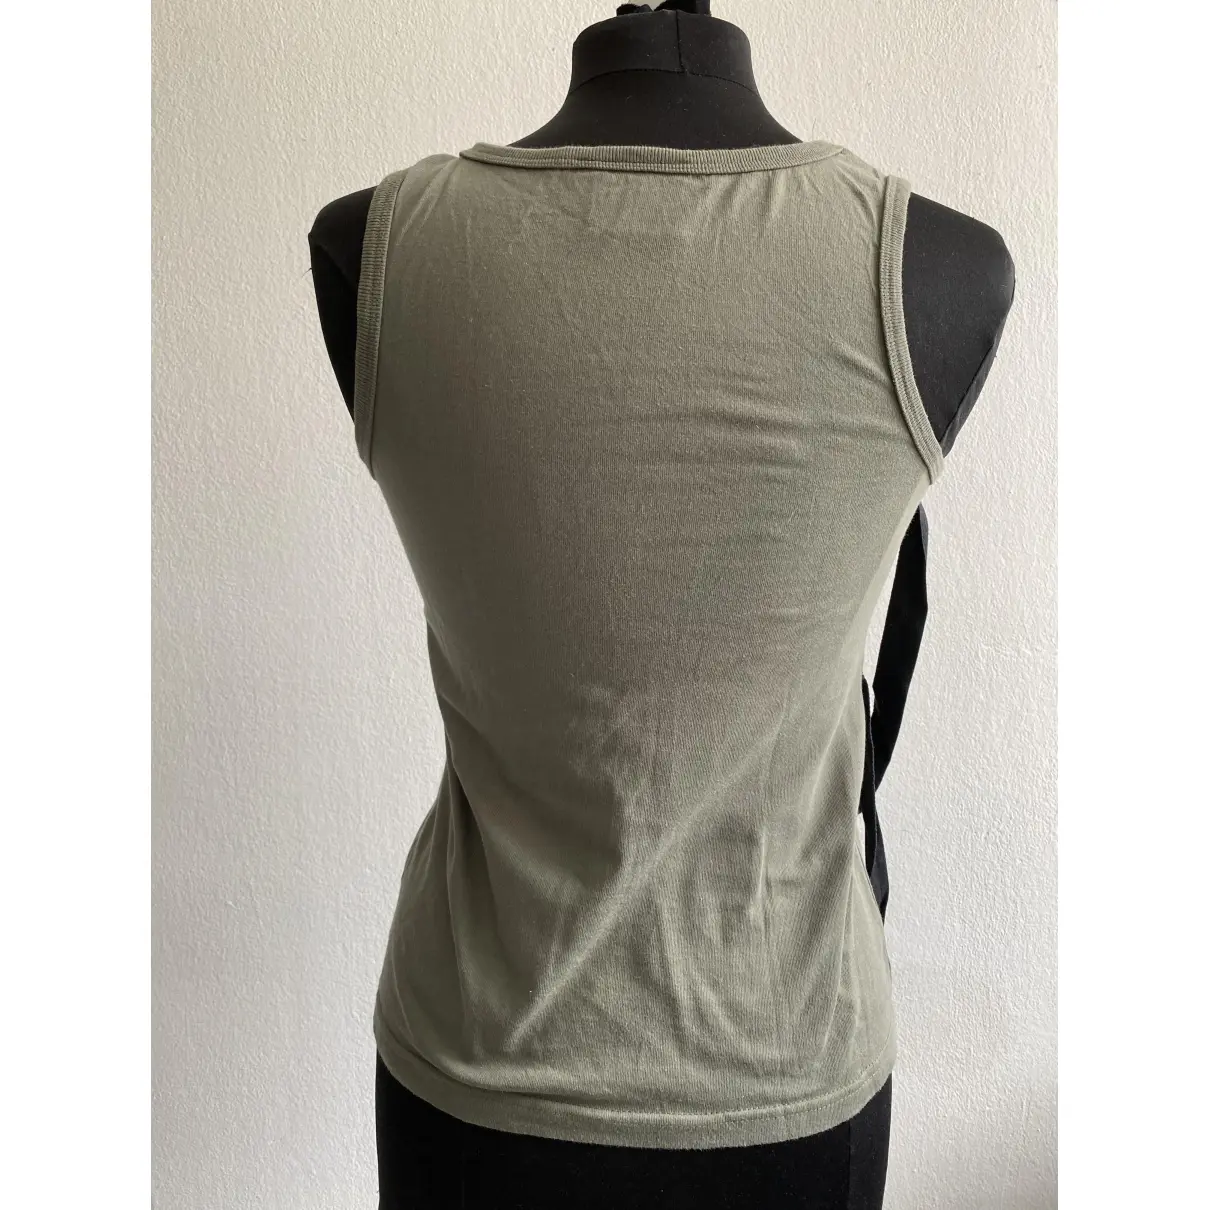 Preen by Thornton Bregazzi Vest for sale - Vintage